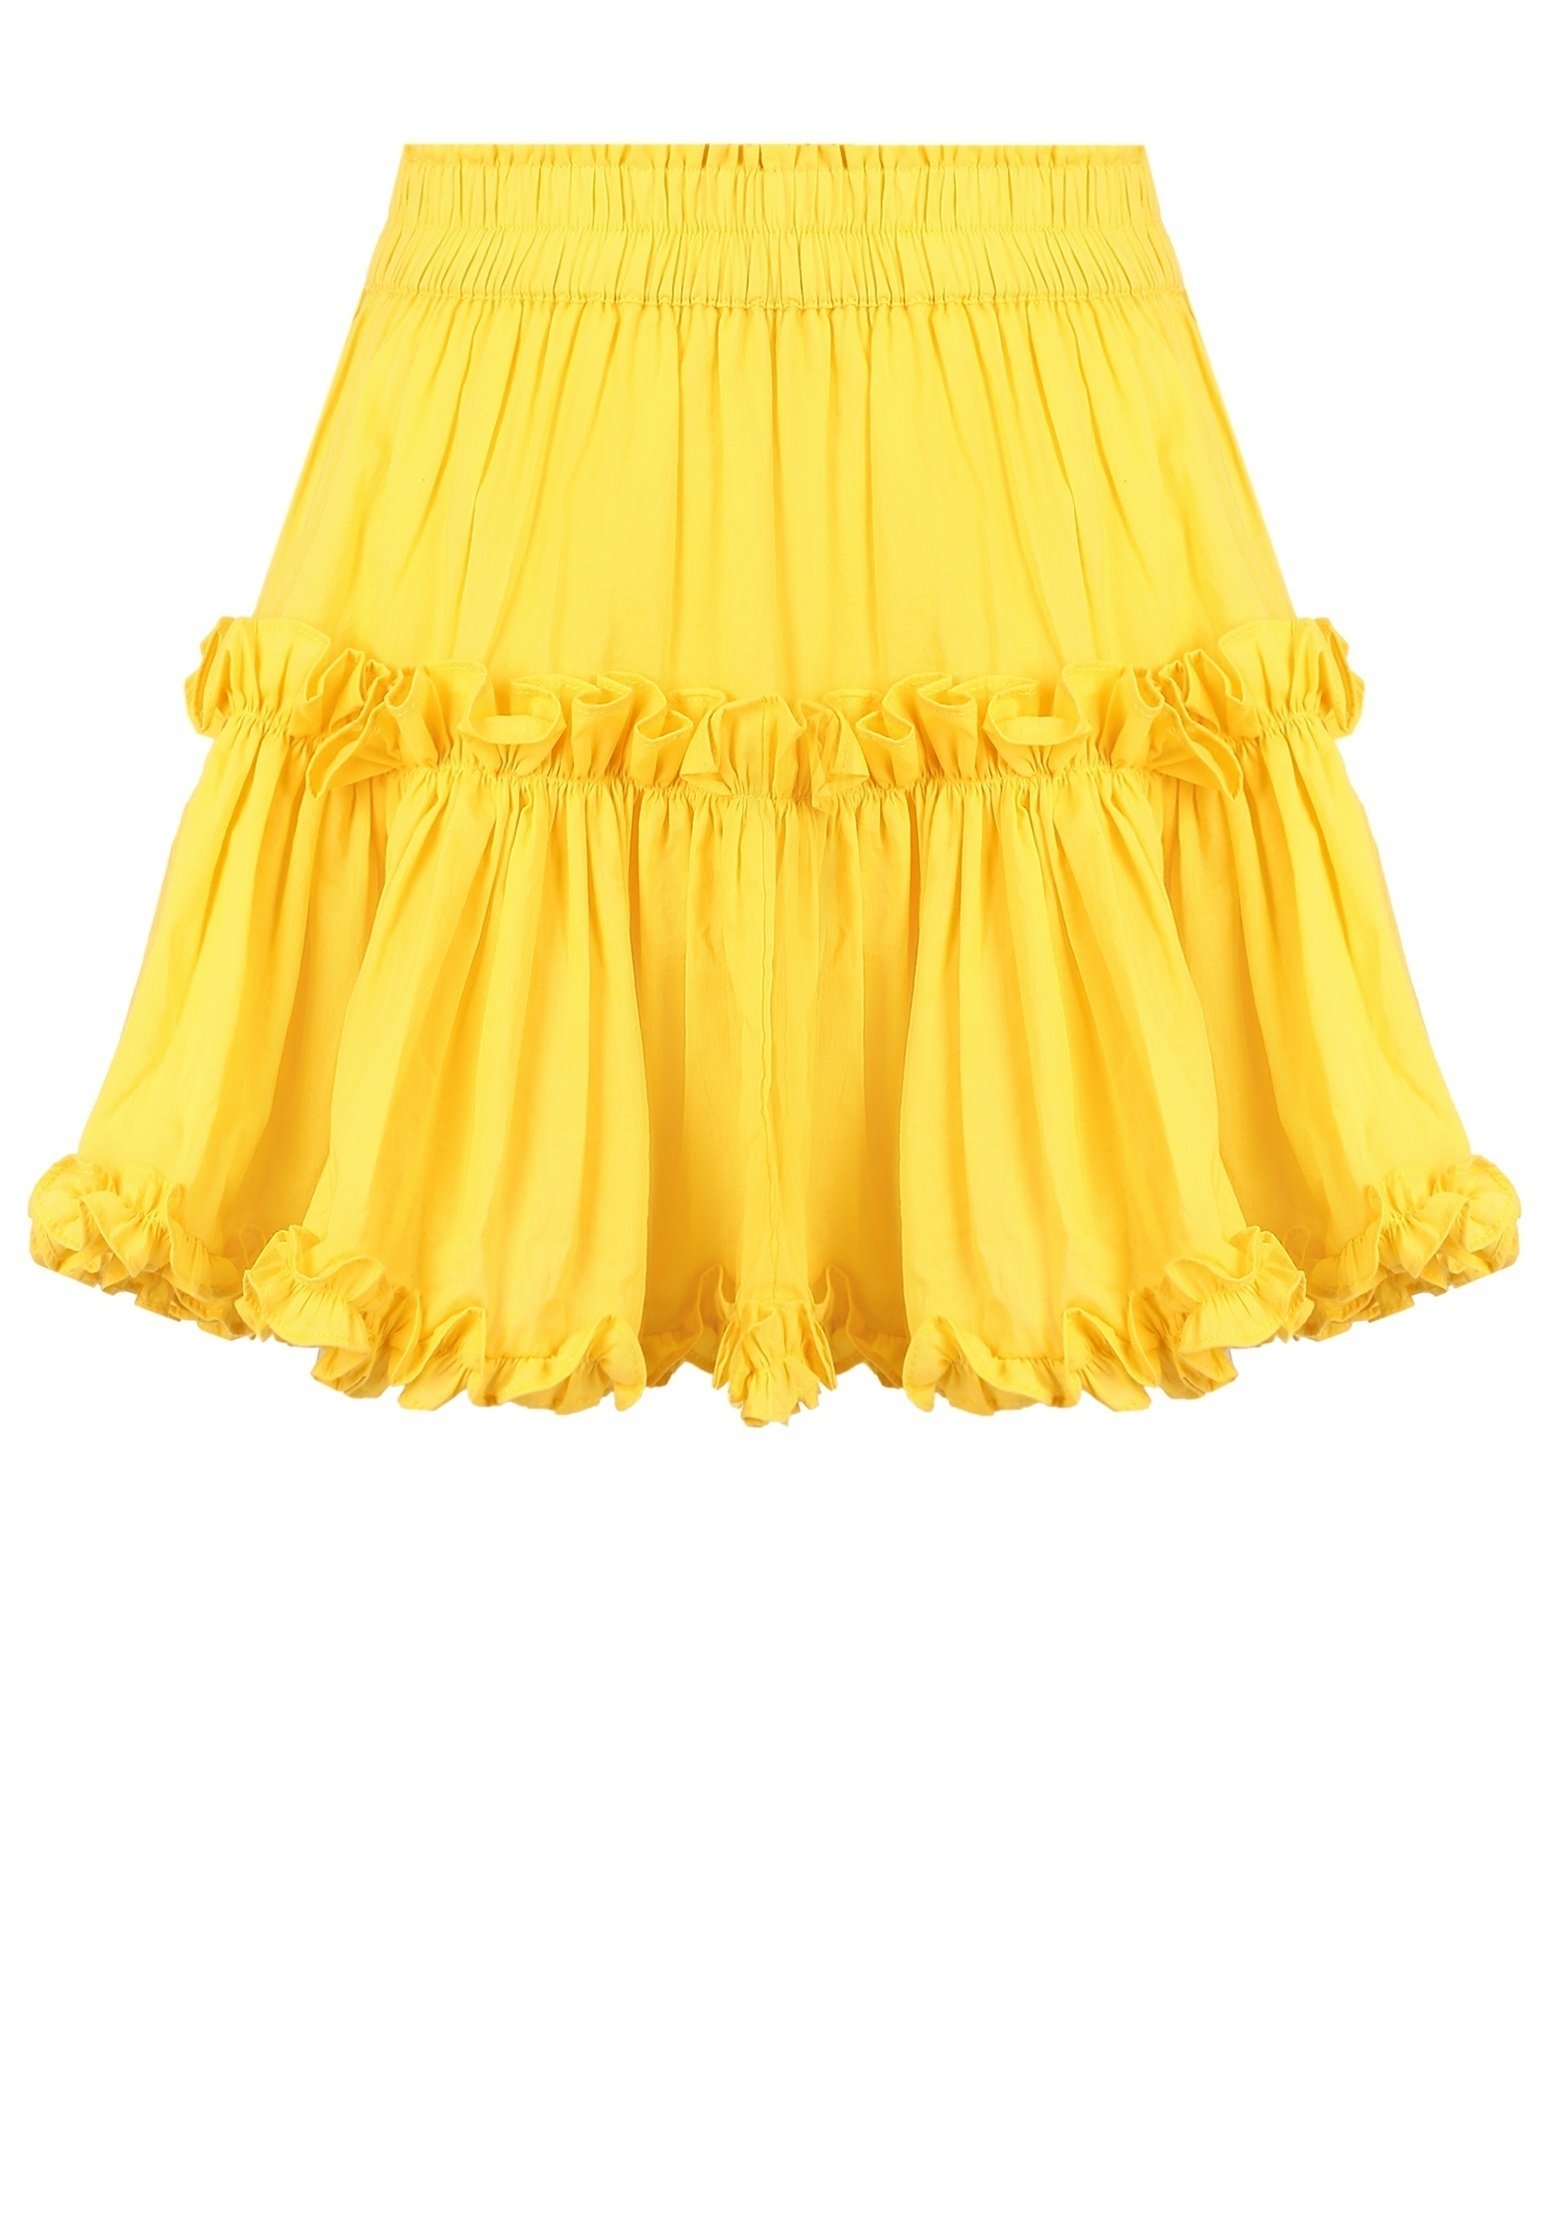 Costume MAIA BERGMAN Color: yellow (Code: 1030) in online store Allure